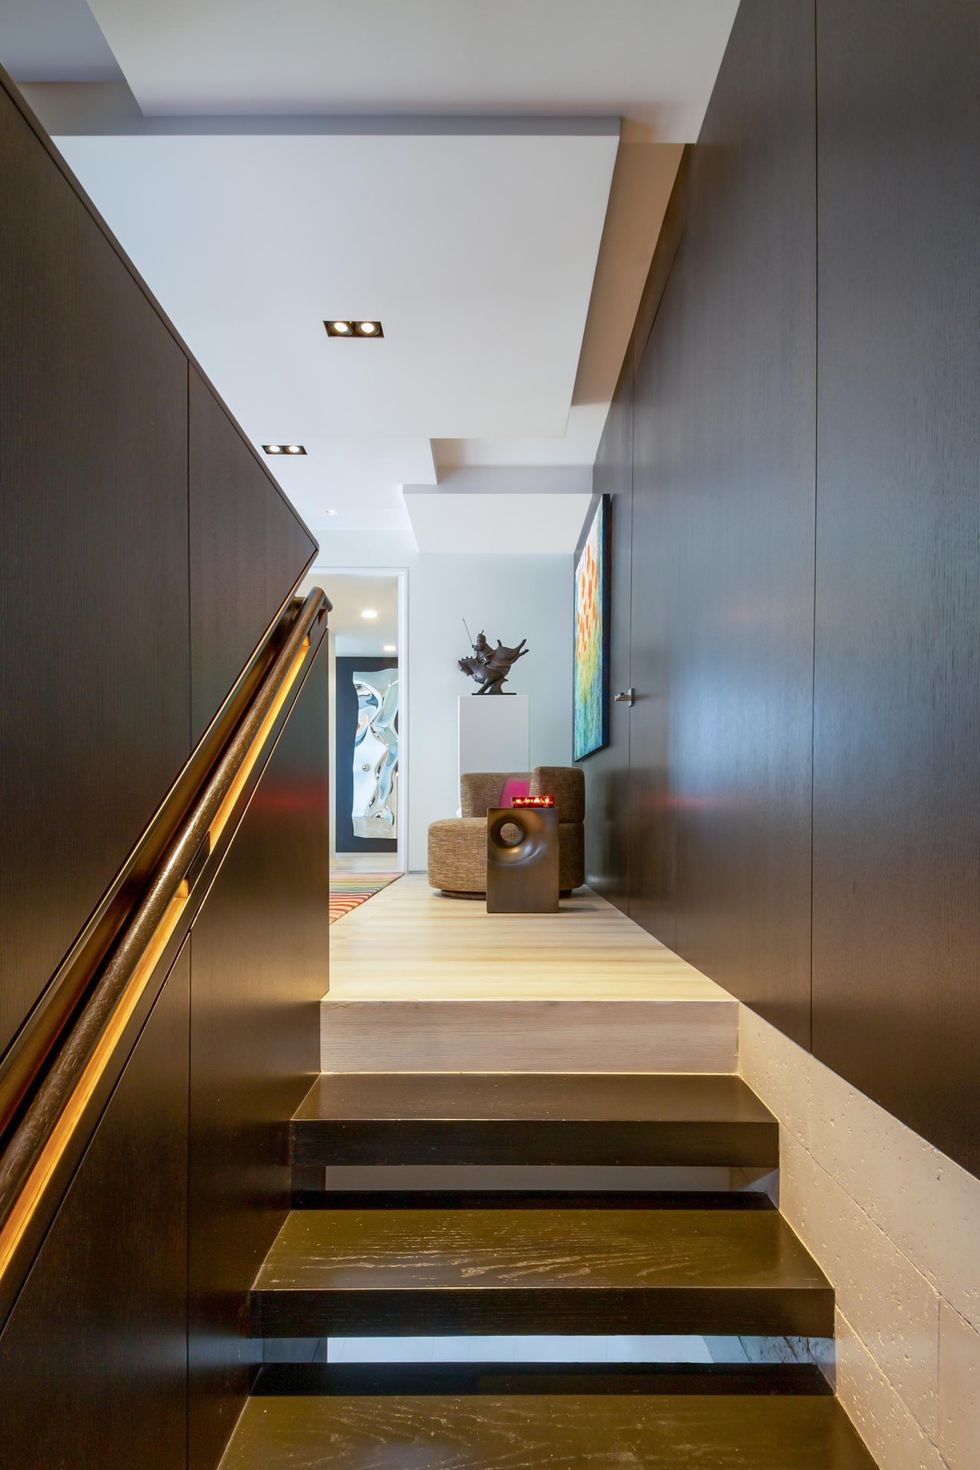 Staircase ideas – 50 modern, eye-catching designs